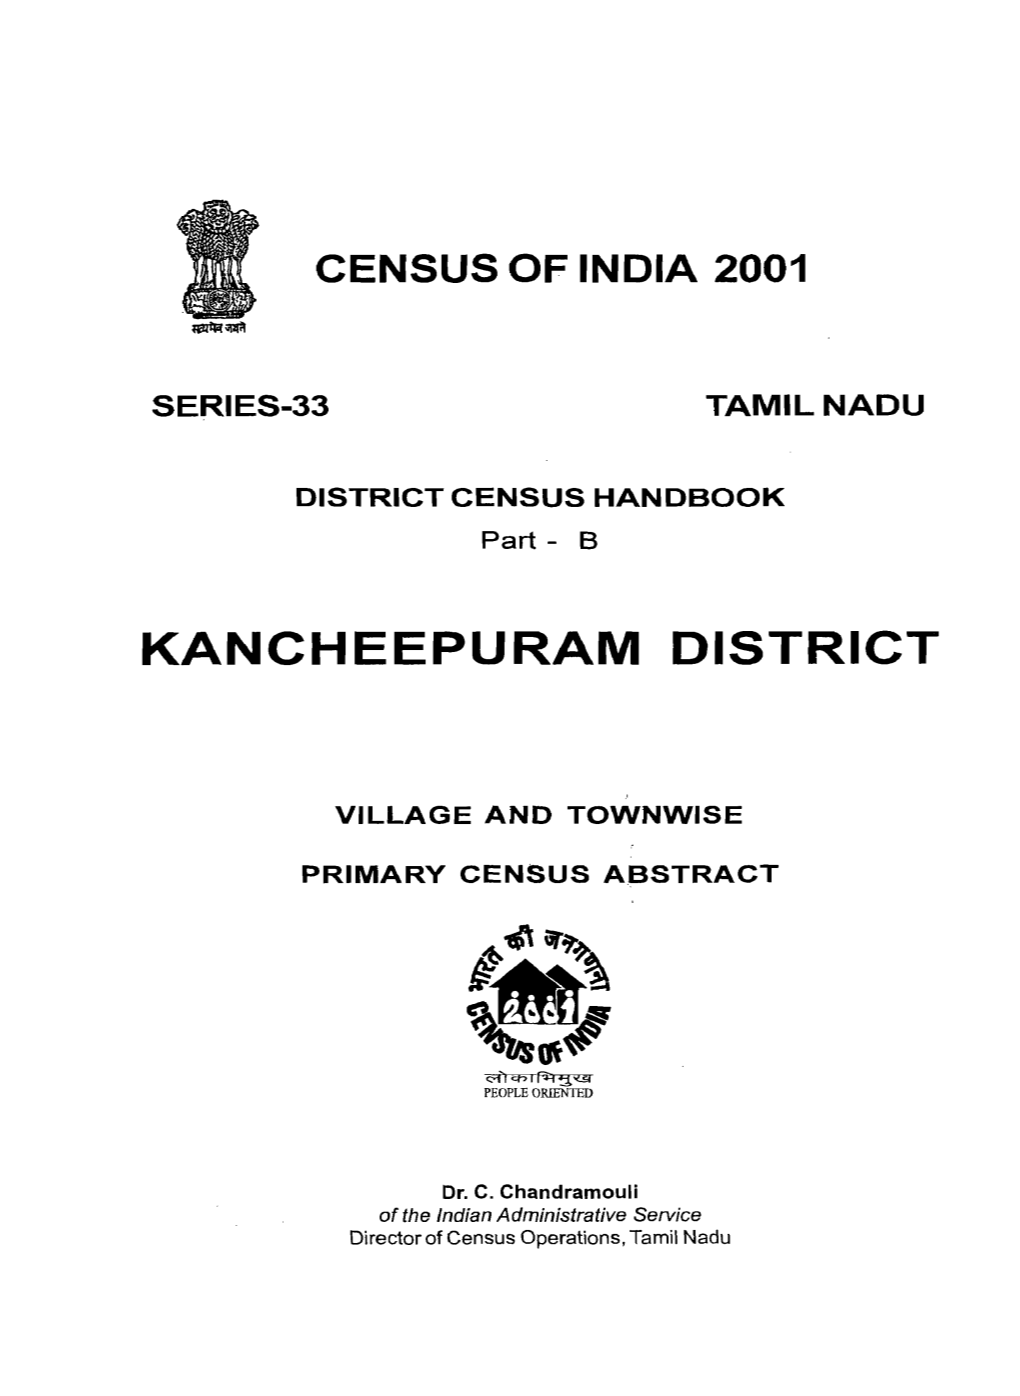 District Census Handbook, Kancheepuram, Part XII-B, Series-33